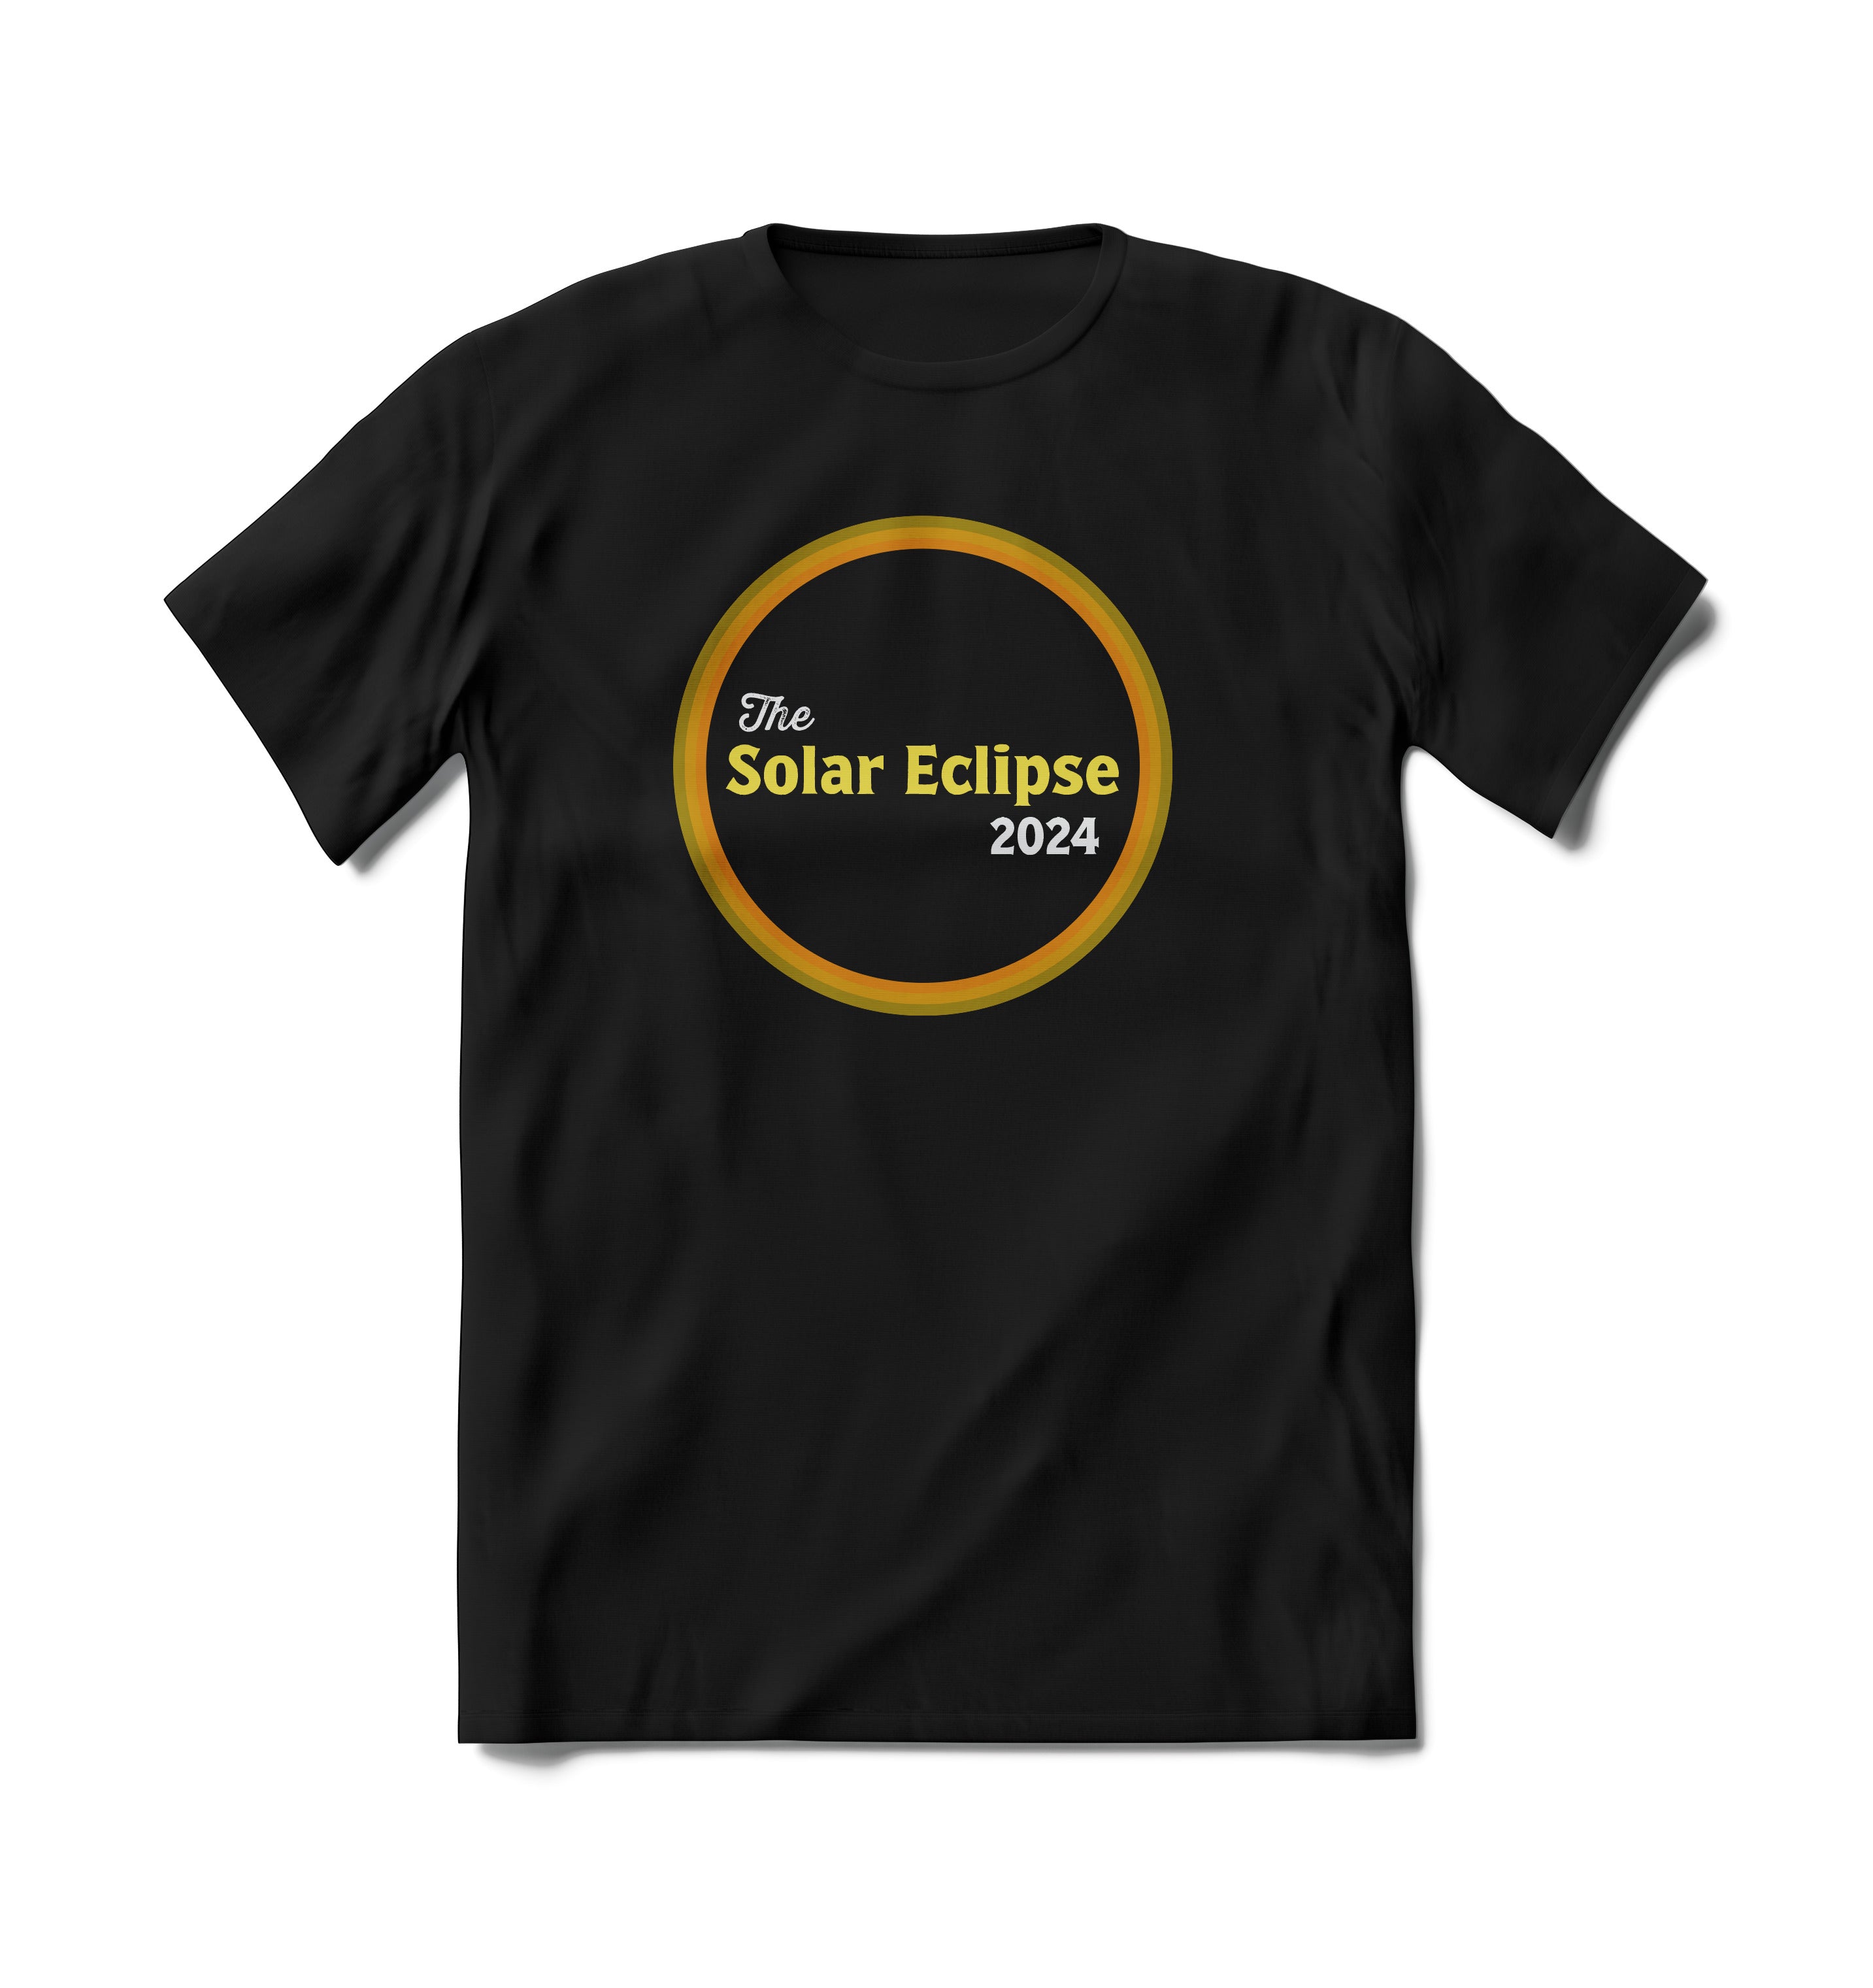 BRIEF INSANITY's Solar Eclipse Short Sleeve T-Shirt